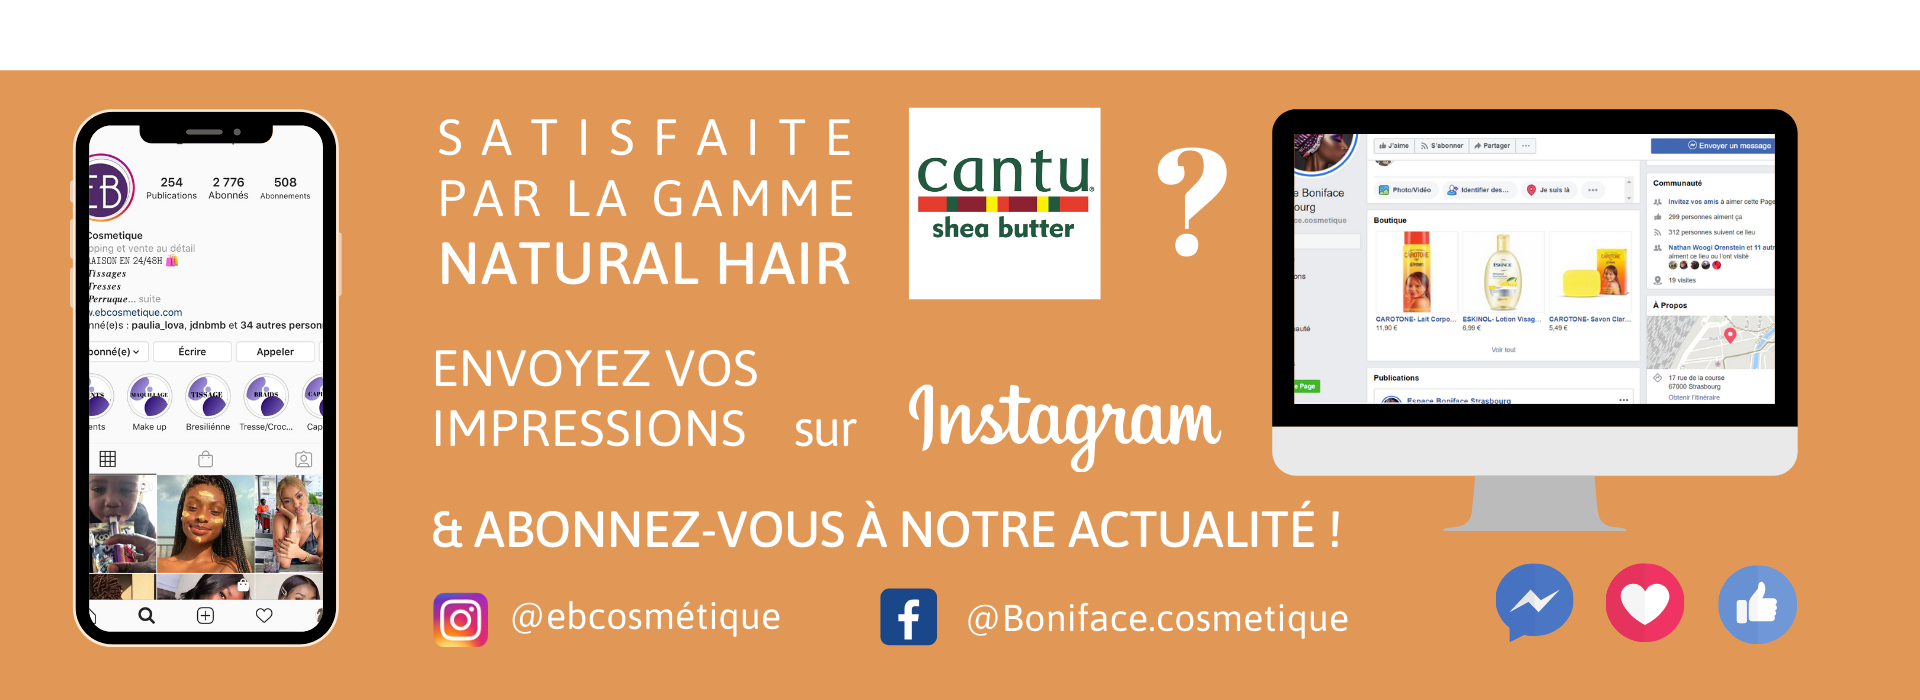 fiche produit ebcosmetique cantu shea butter natural hair coil calm detangler routine cheveux afro facebook instagram